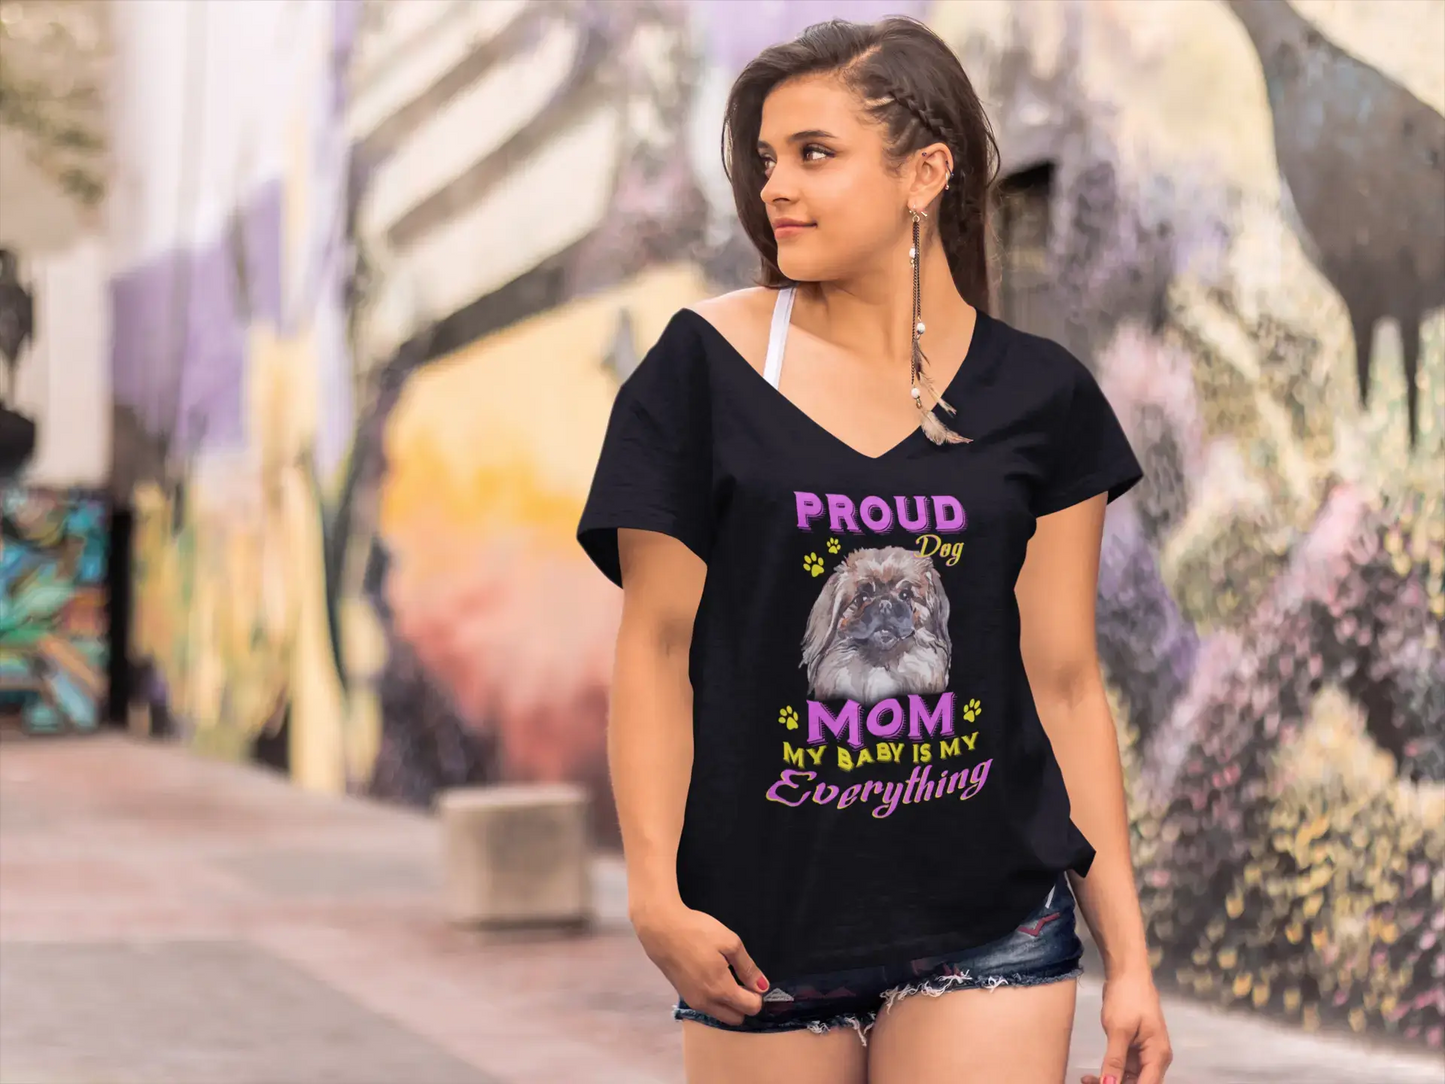 ULTRABASIC Women's T-Shirt Proud Day - Pekingese Dog Mom - My Baby is My Everything